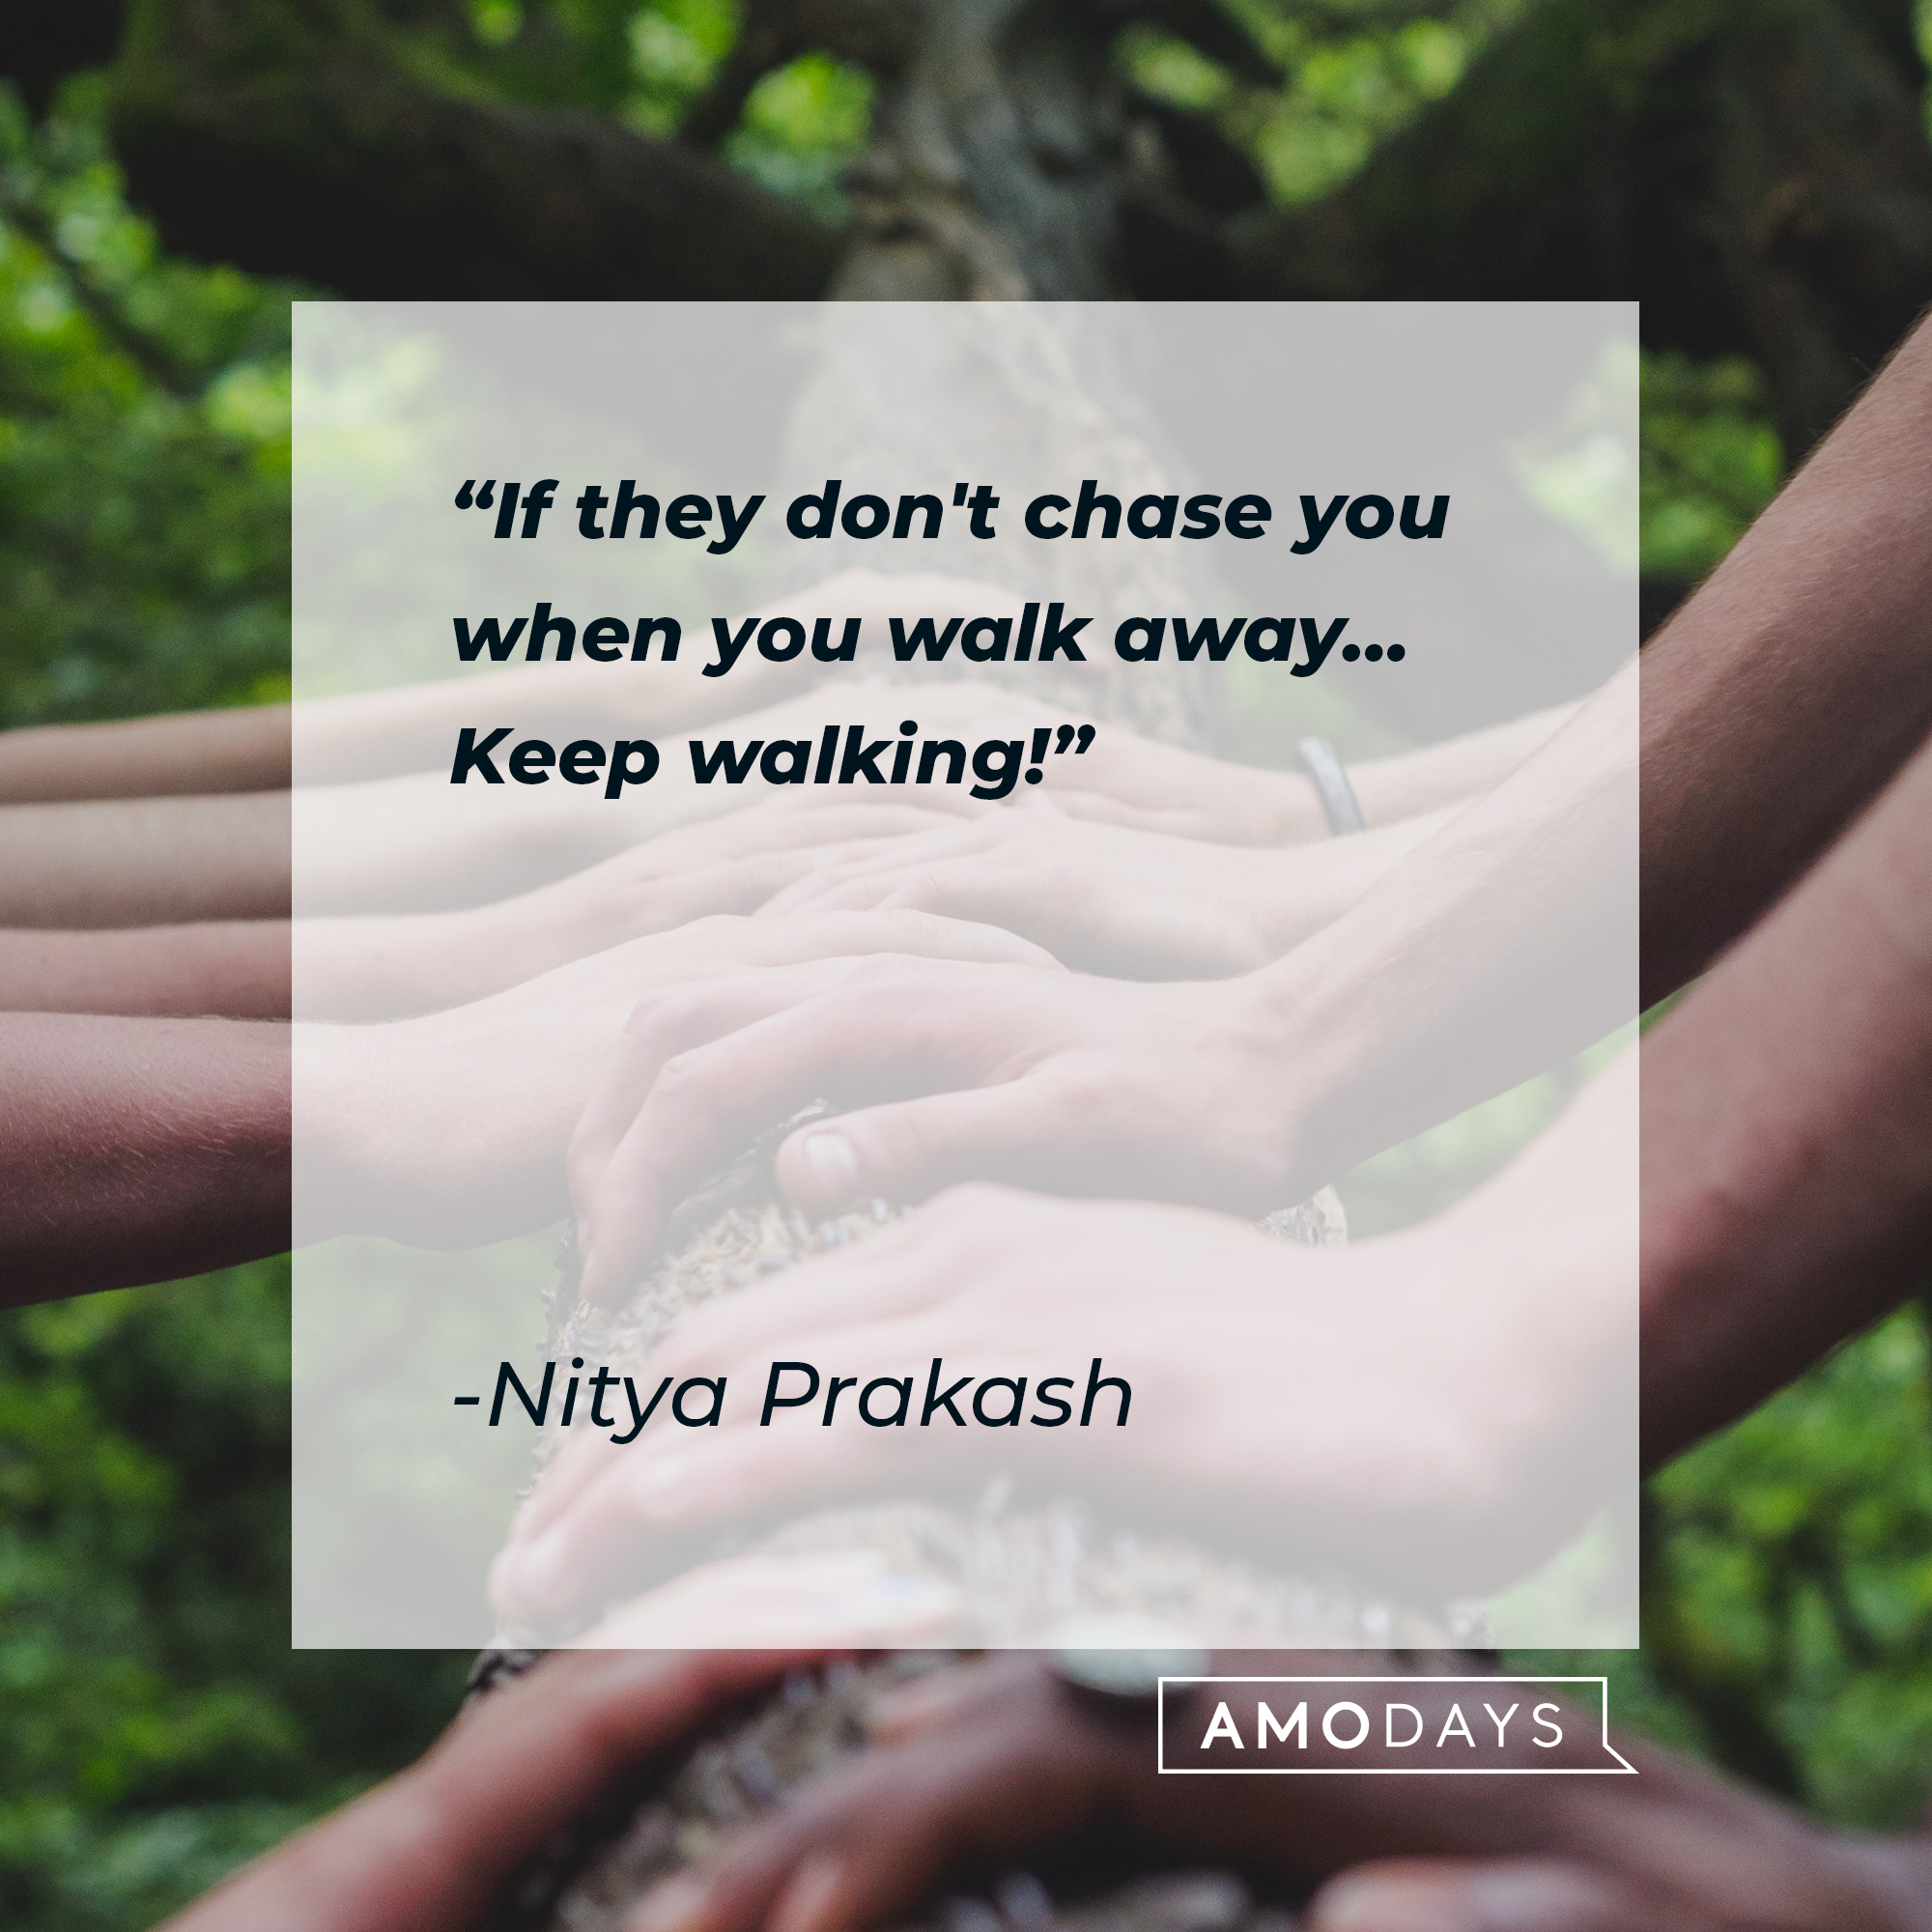 Nitya Prakash's quote: "If they don't chase you when you walk away… Keep walking!" | Image: Unsplash.com